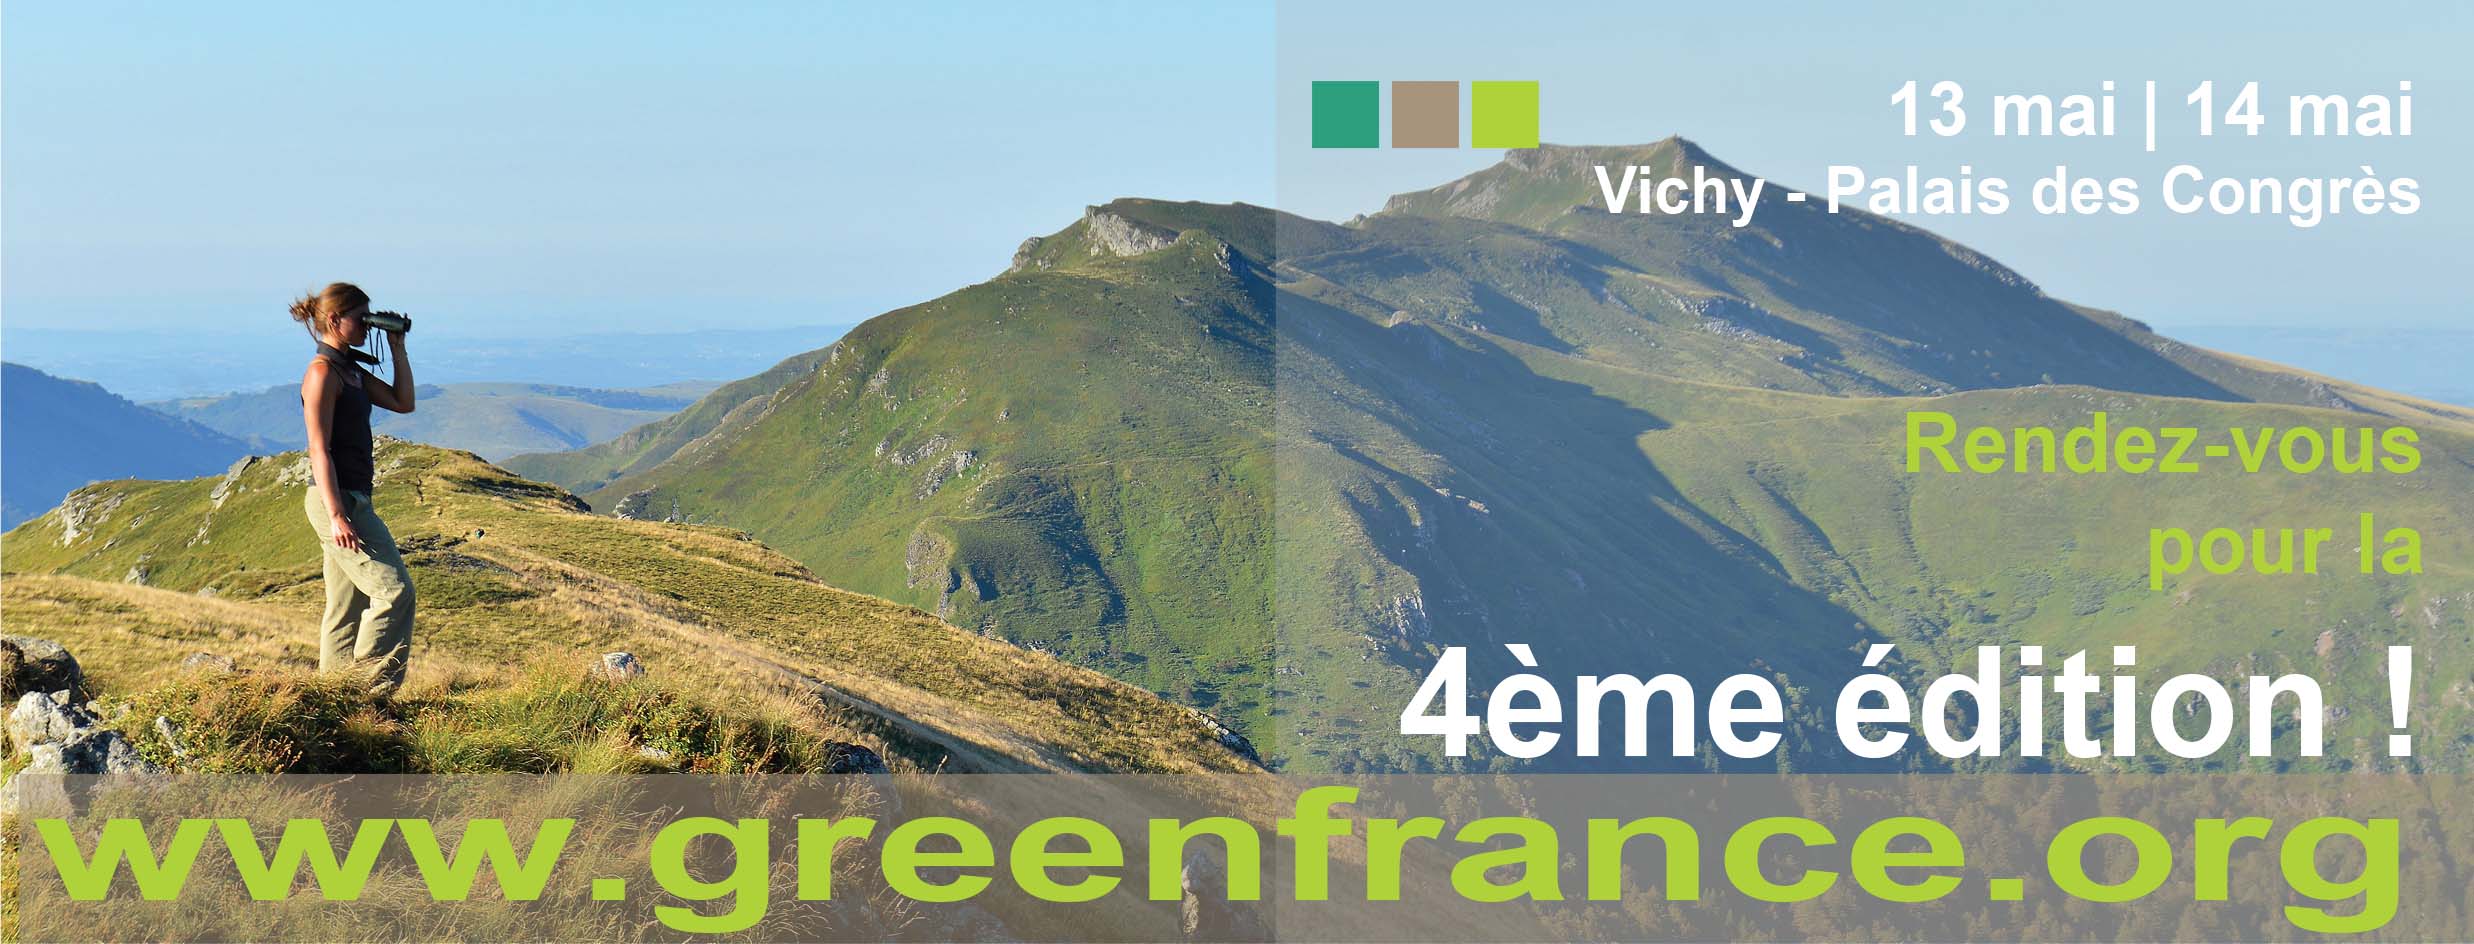 greenfrance 2019 vichy